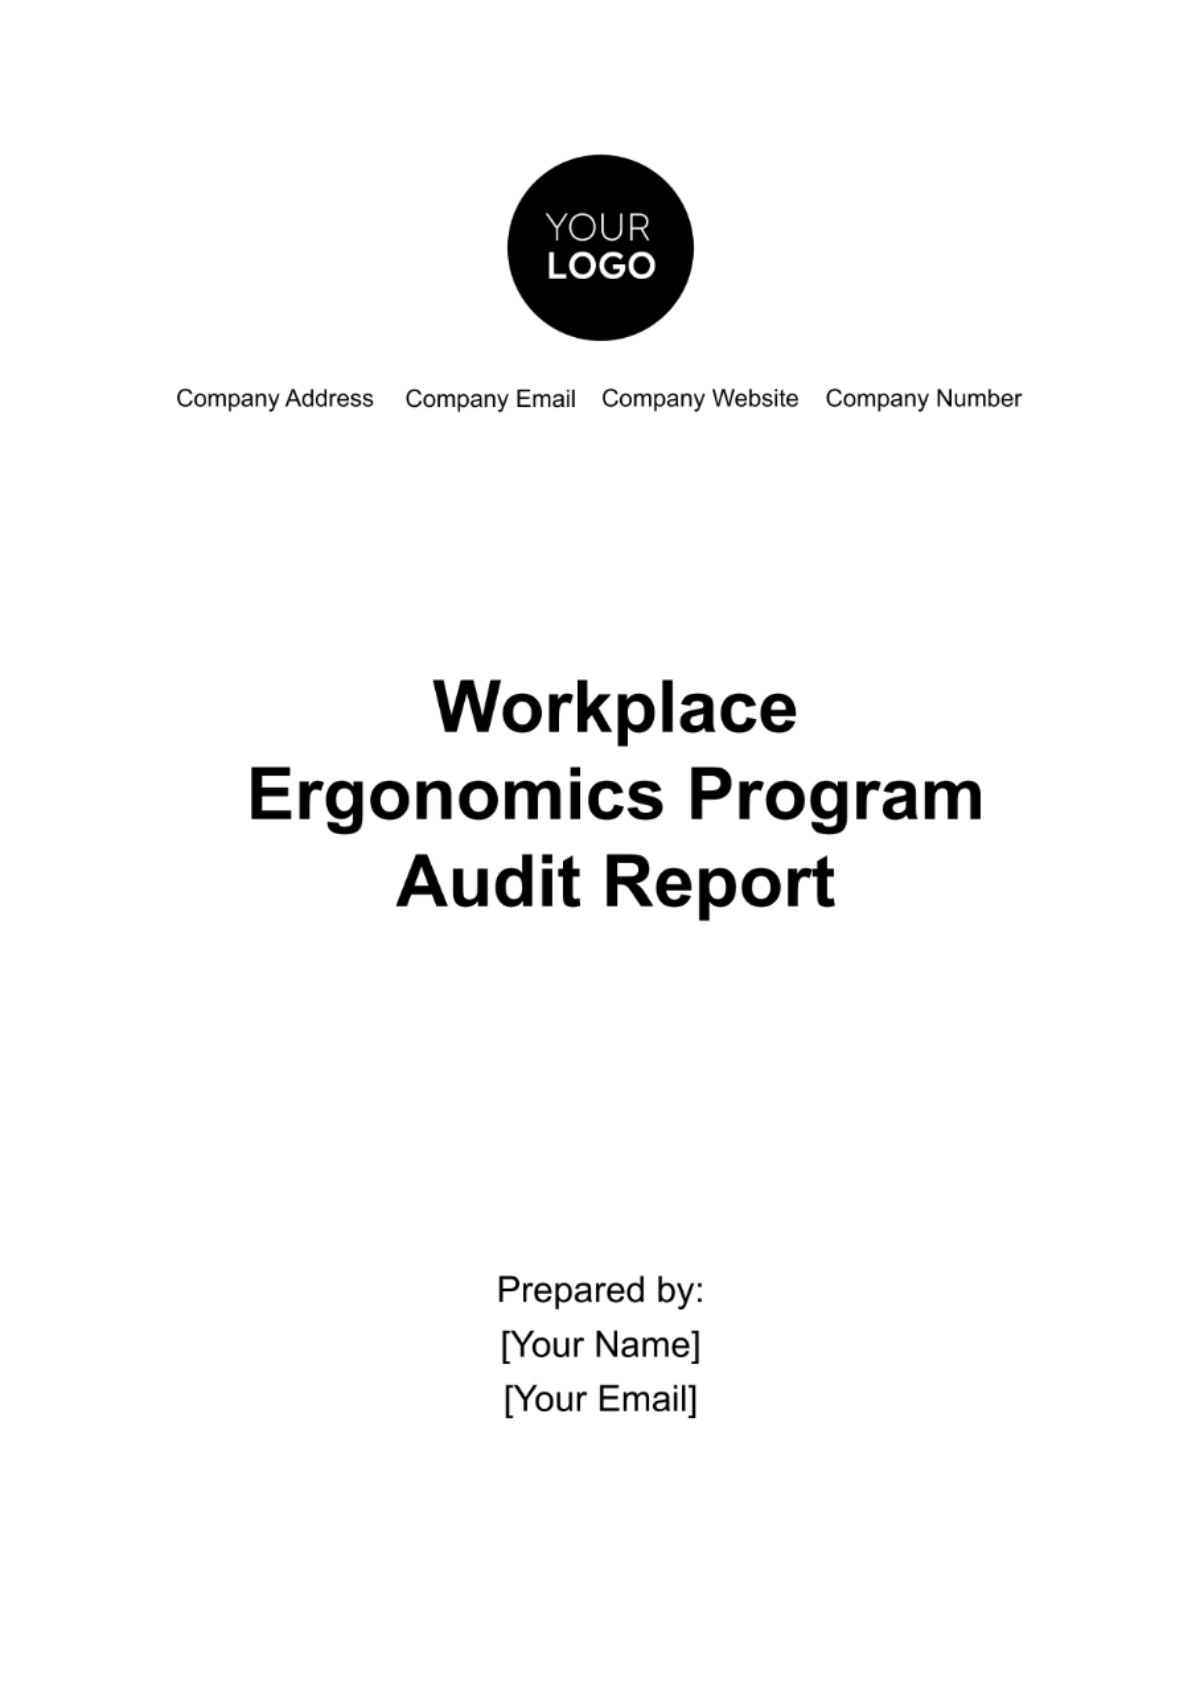 Workplace Ergonomics Program Audit Report Template